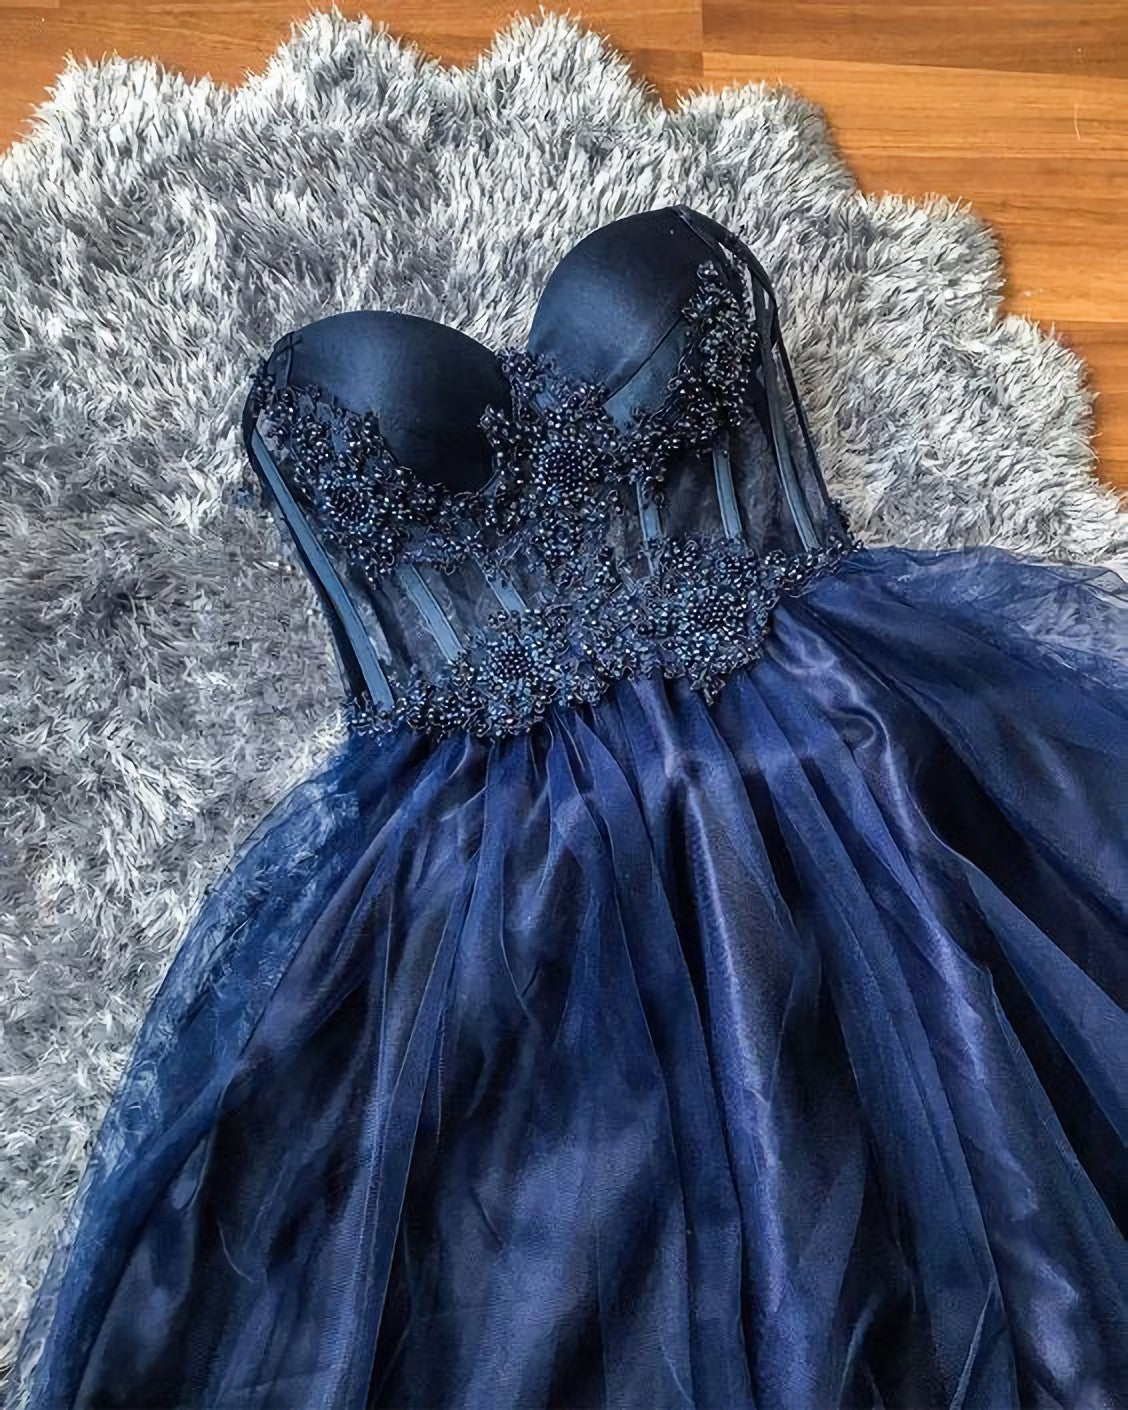 Prom Dress Gown, Prom Dress, Ball Gown Formal Dress, Evening Gown Navy Blue Evening Dress